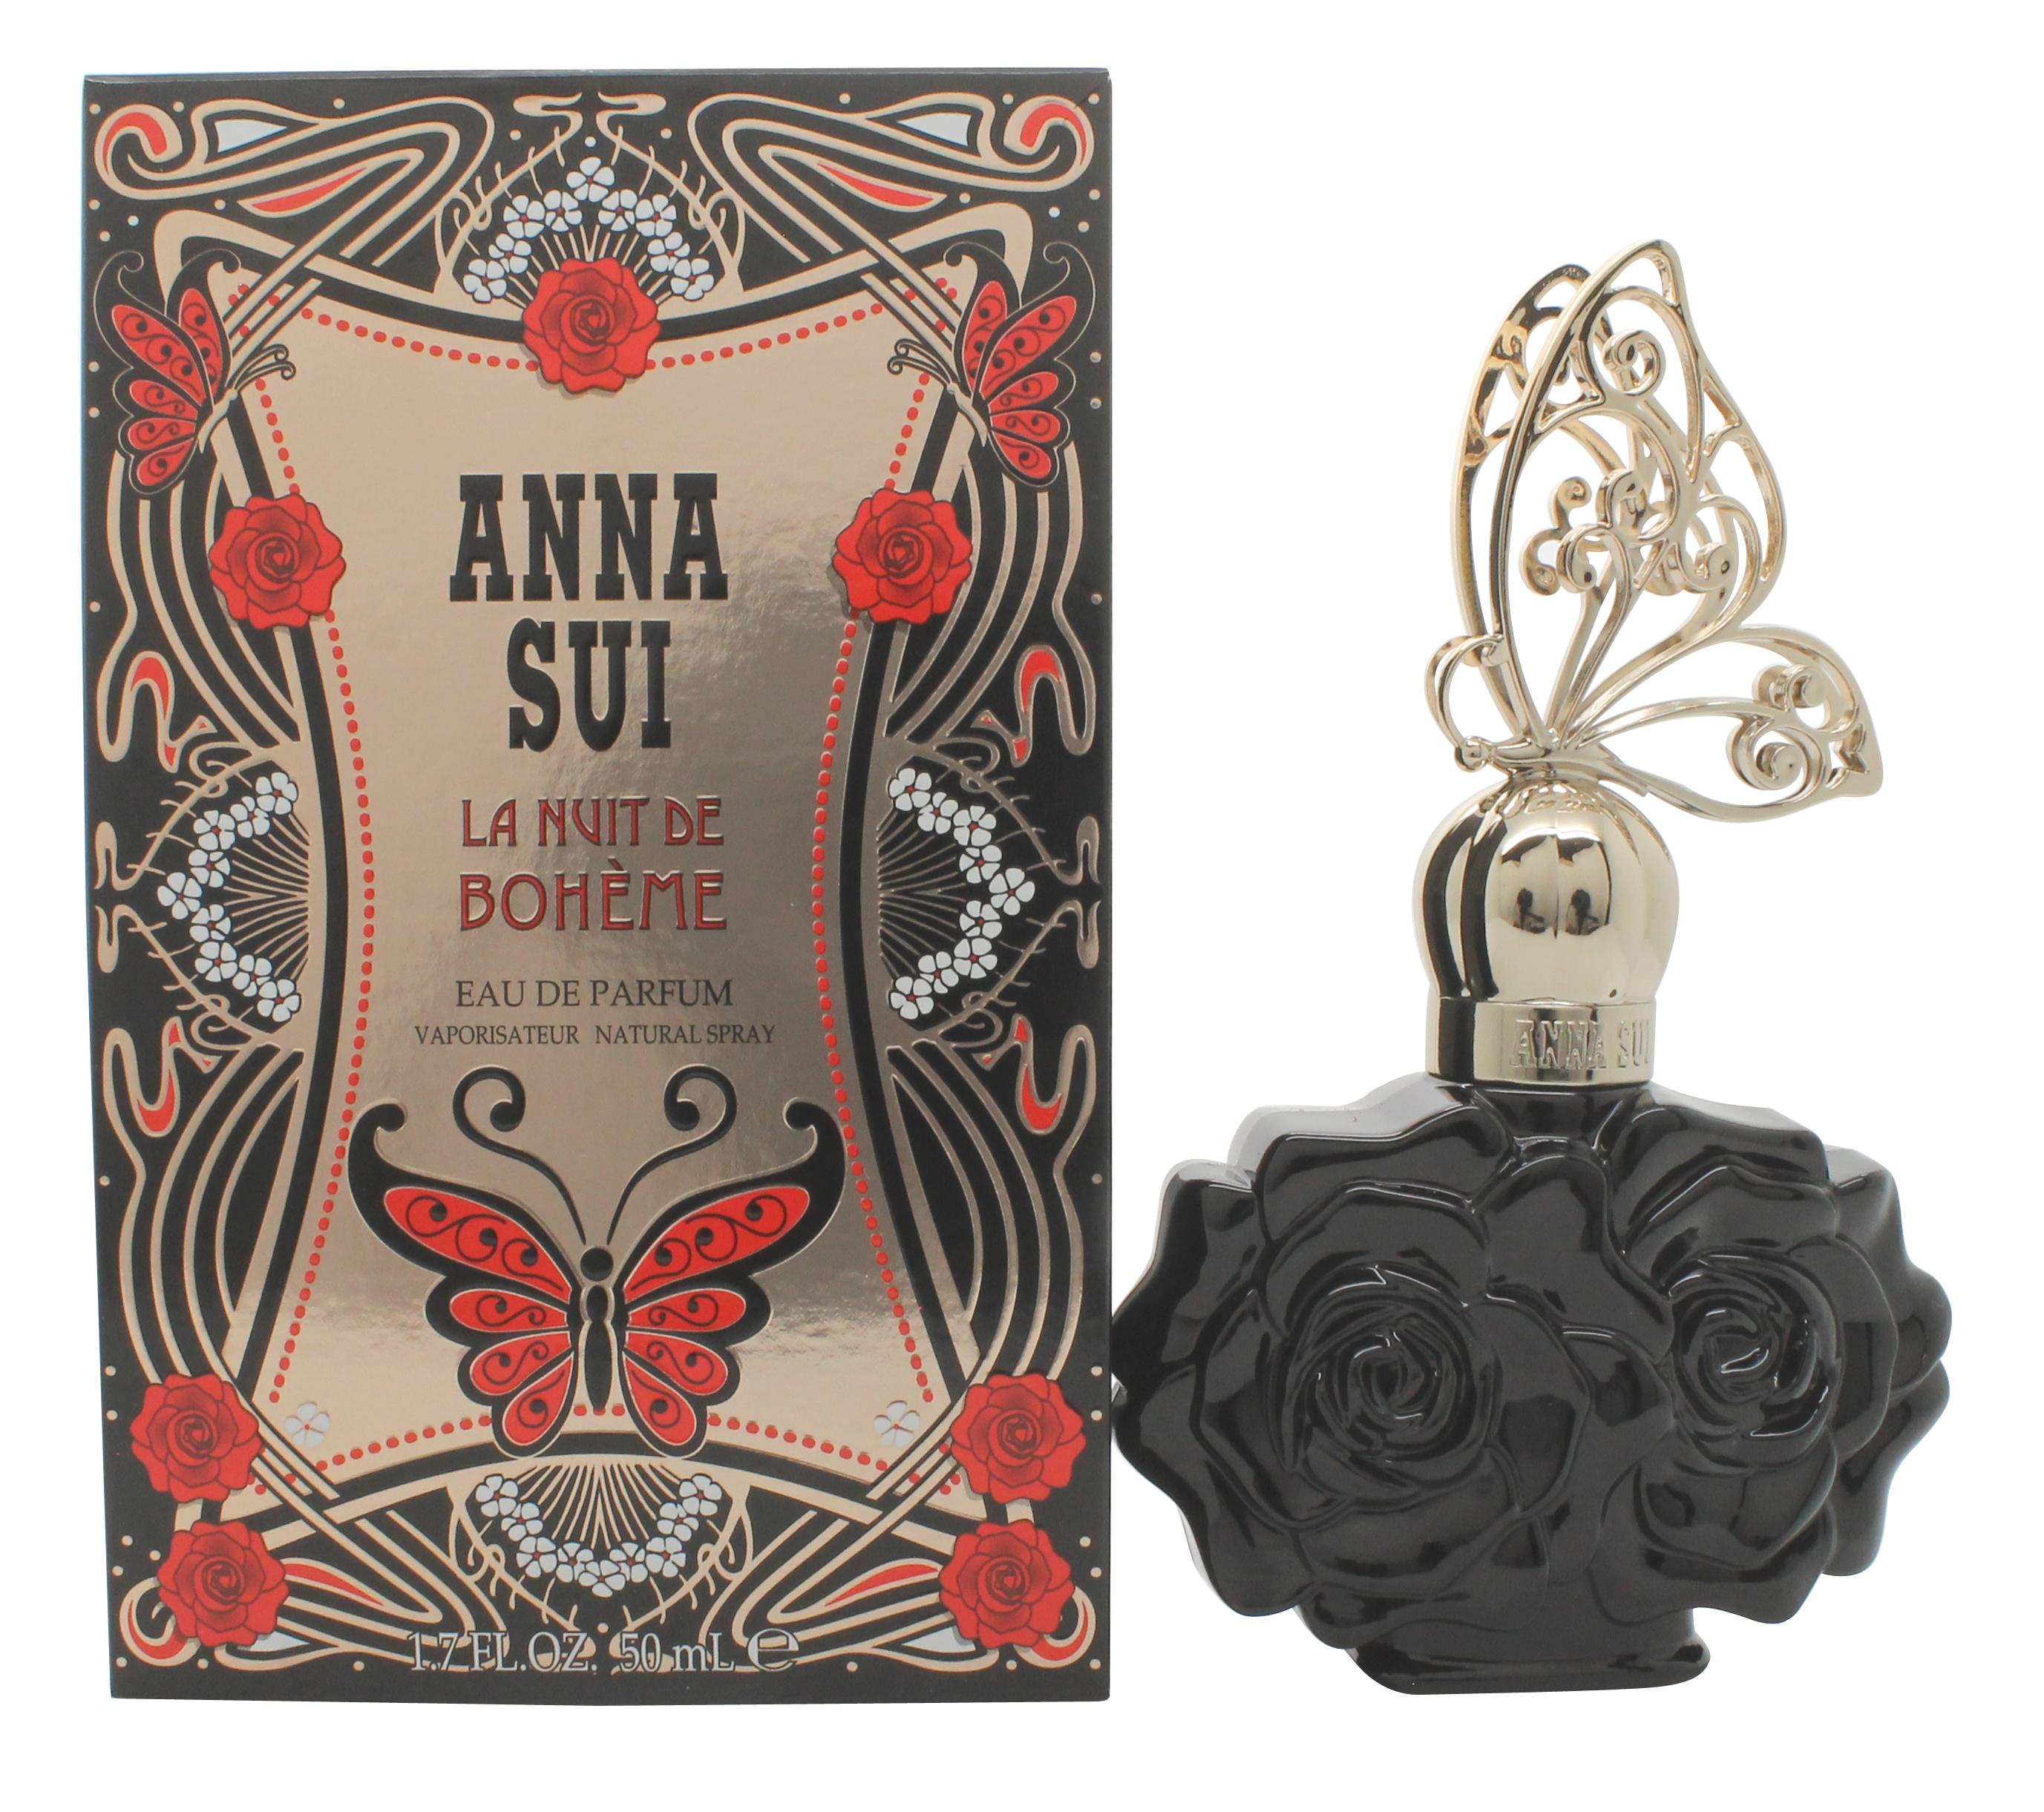 Anna Sui La Nuit de Boheme Eau de Parfum 50ml Spray